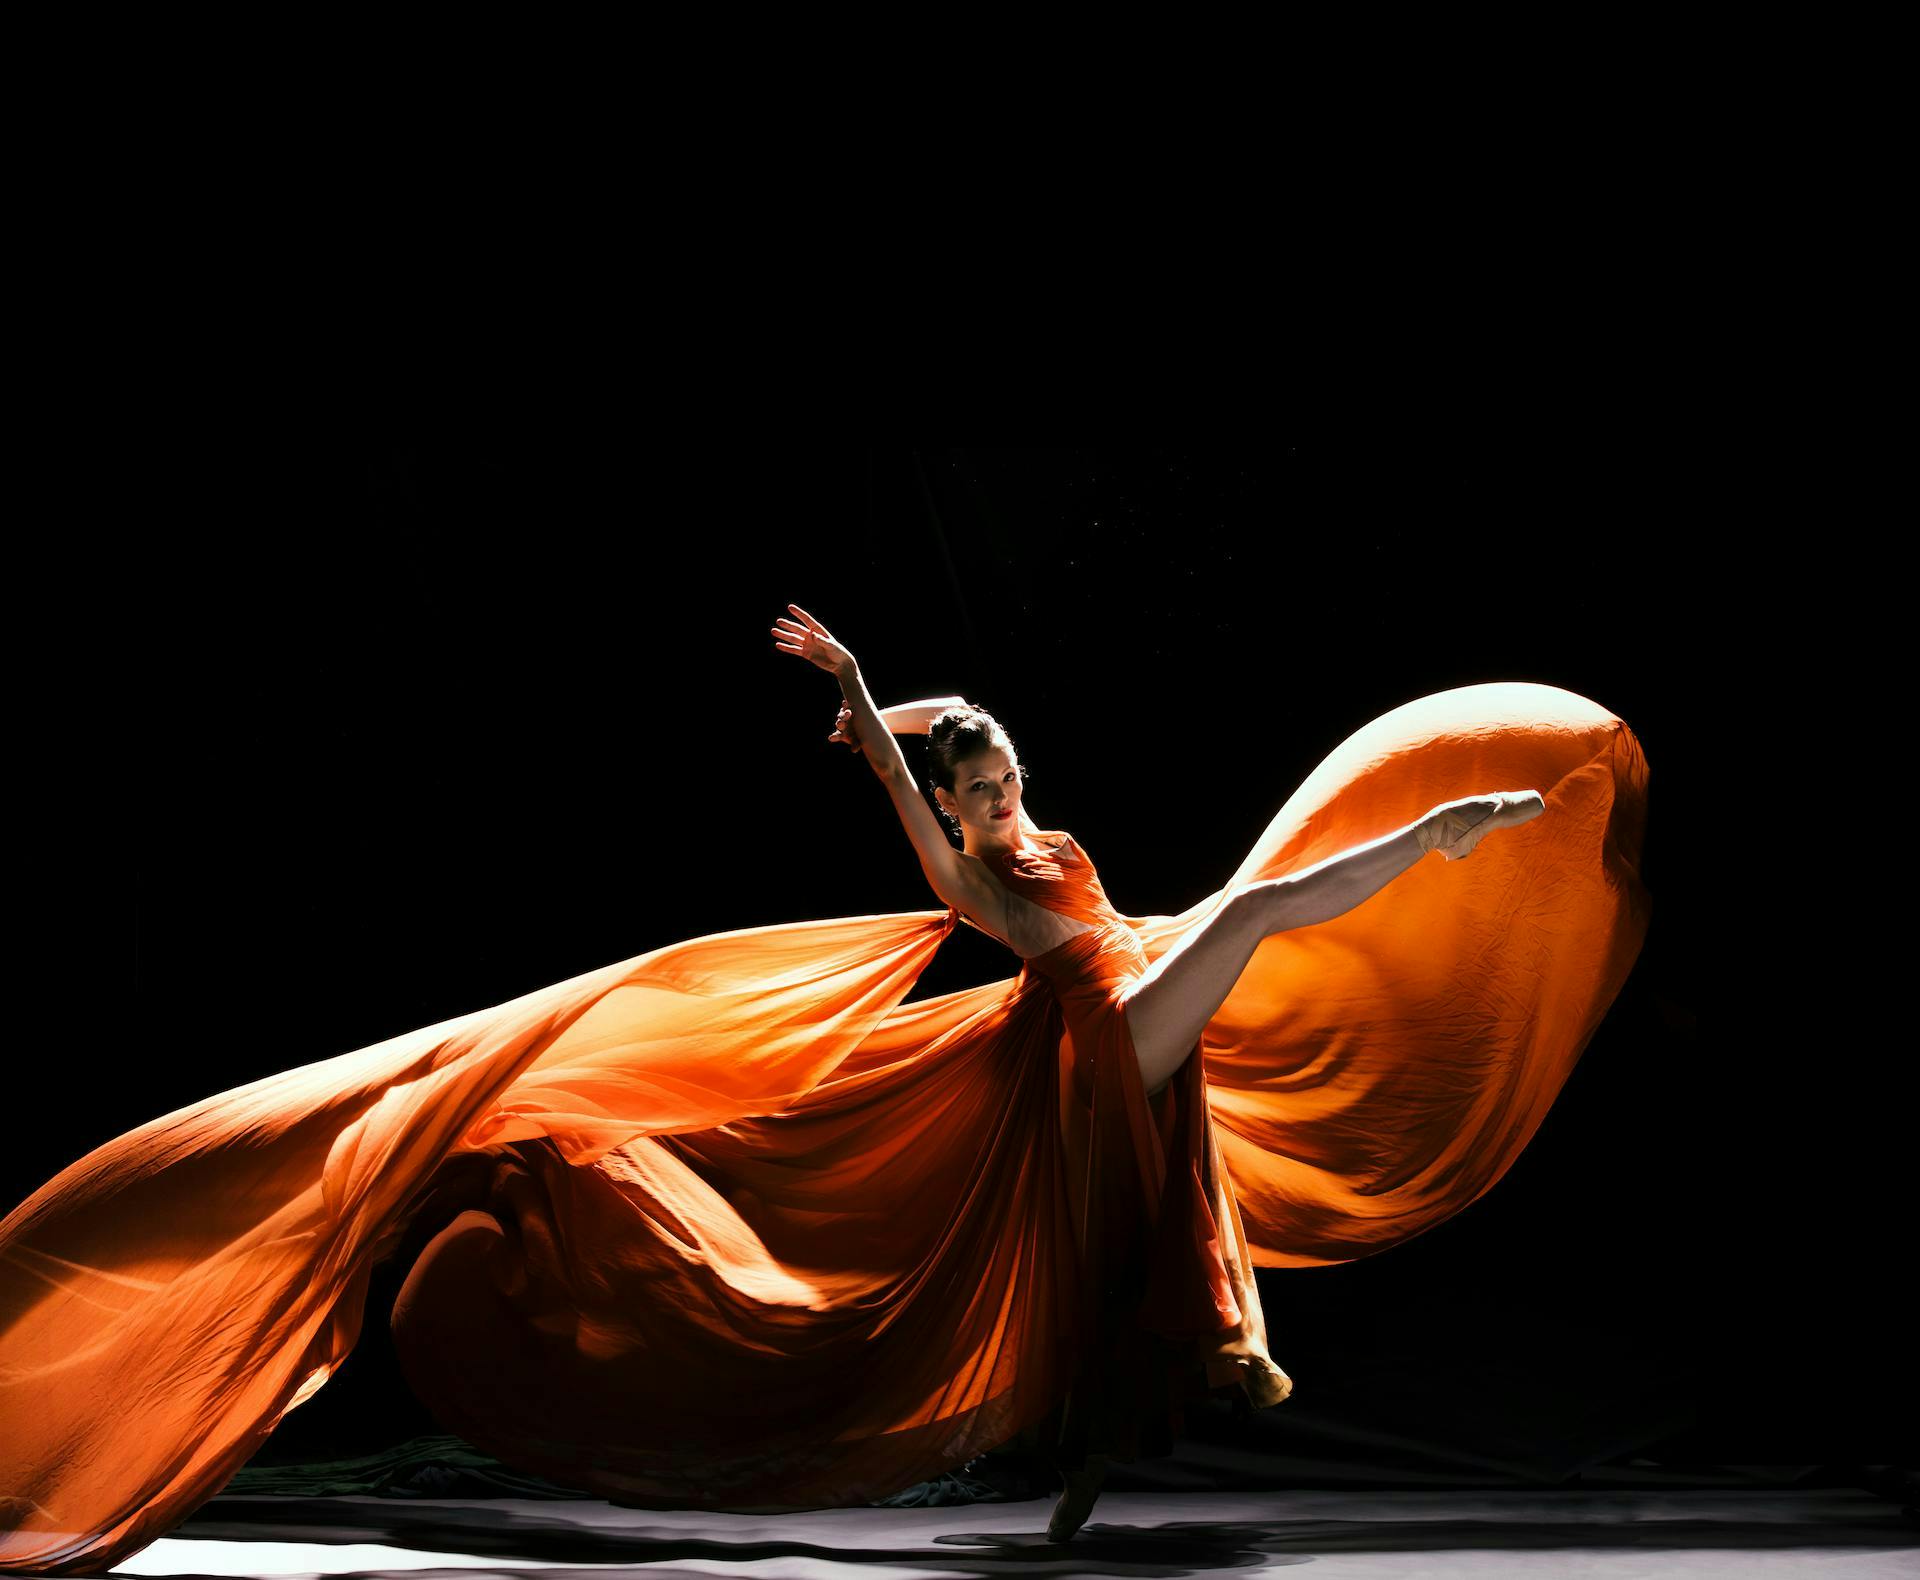 ballet v vl firebird studio dance pose leisure activities performer person human dance flamenco